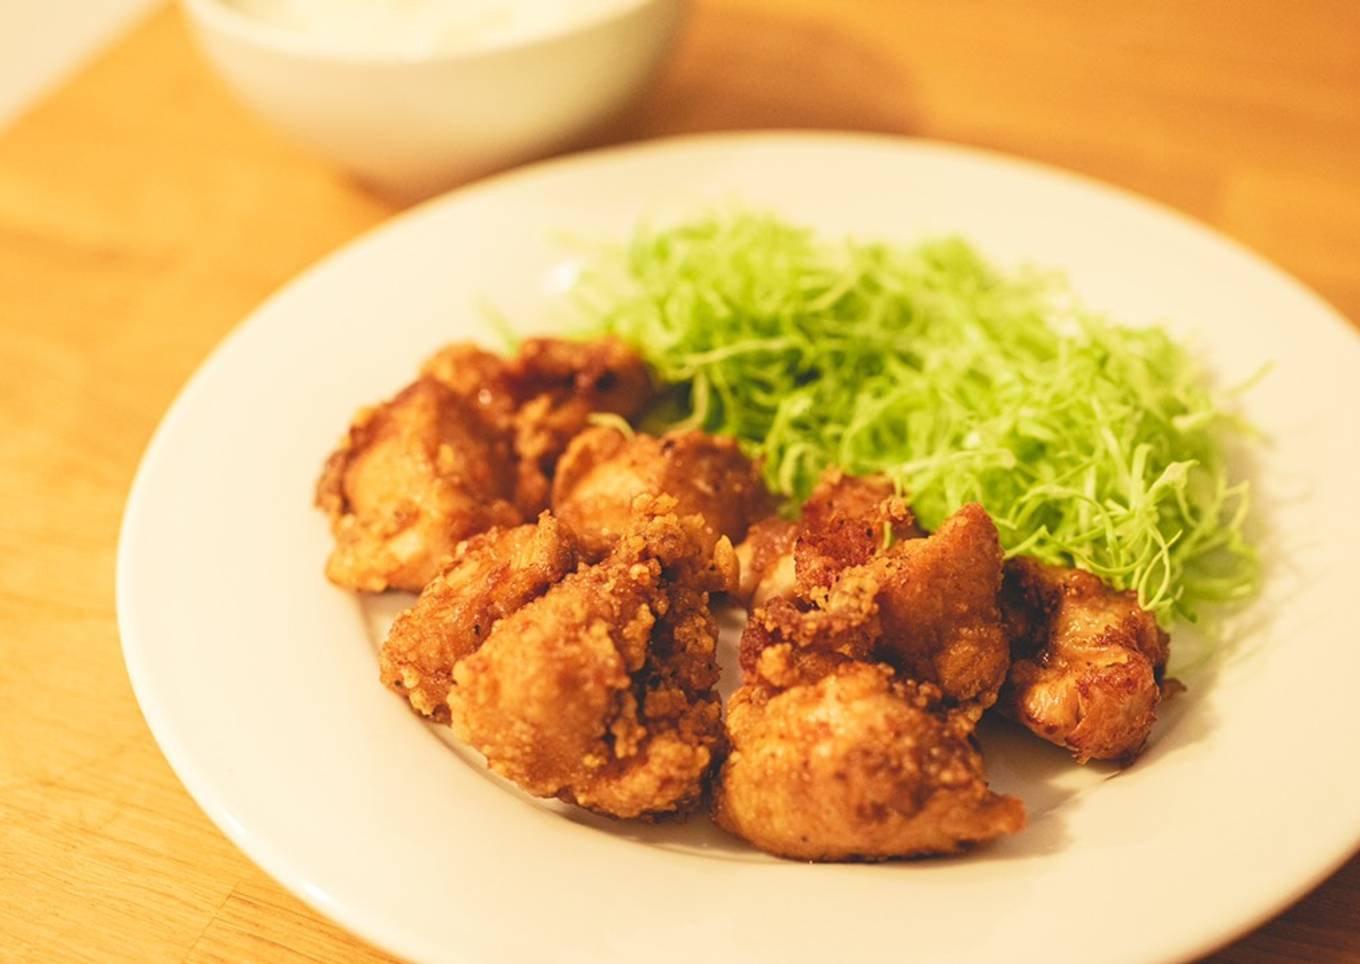 Kara-age: Japanese style fried chicken